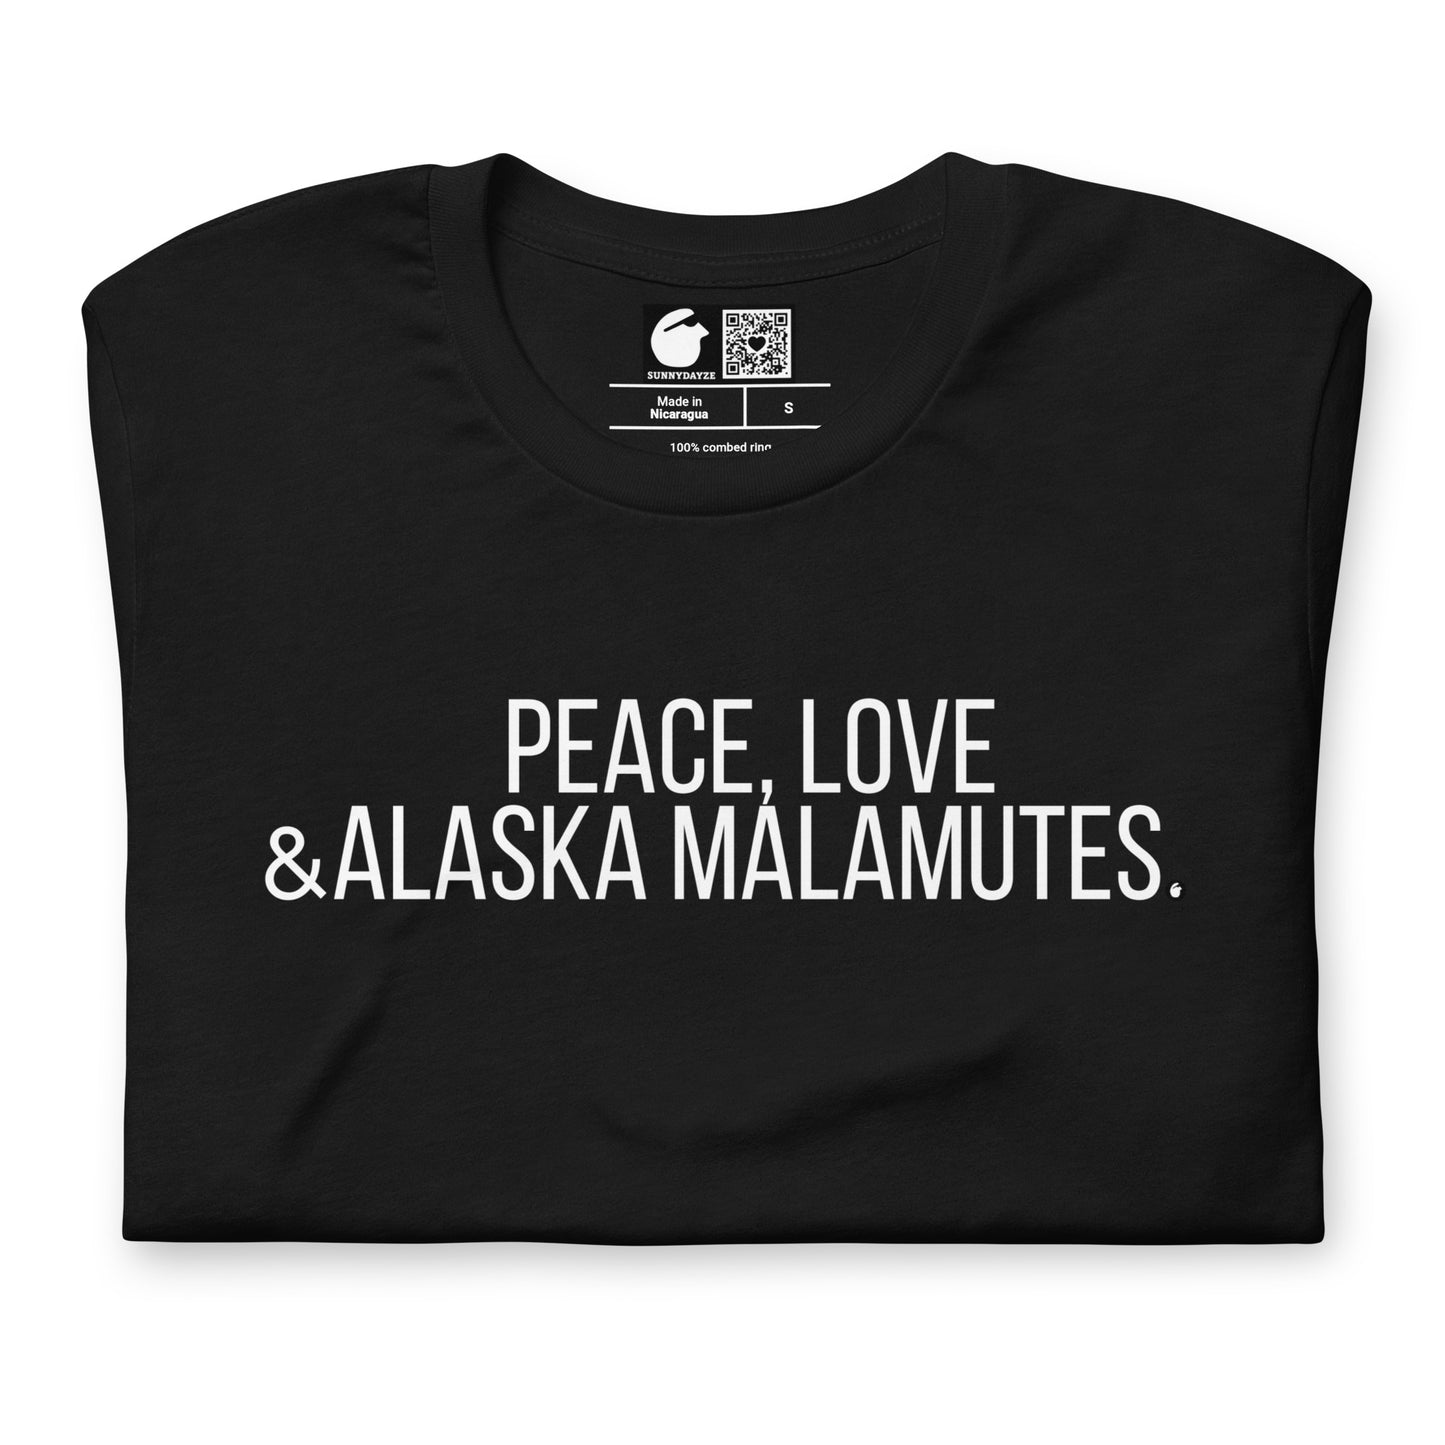 ALASKAN MALAMUTES Short-Sleeve Unisex t-shirt